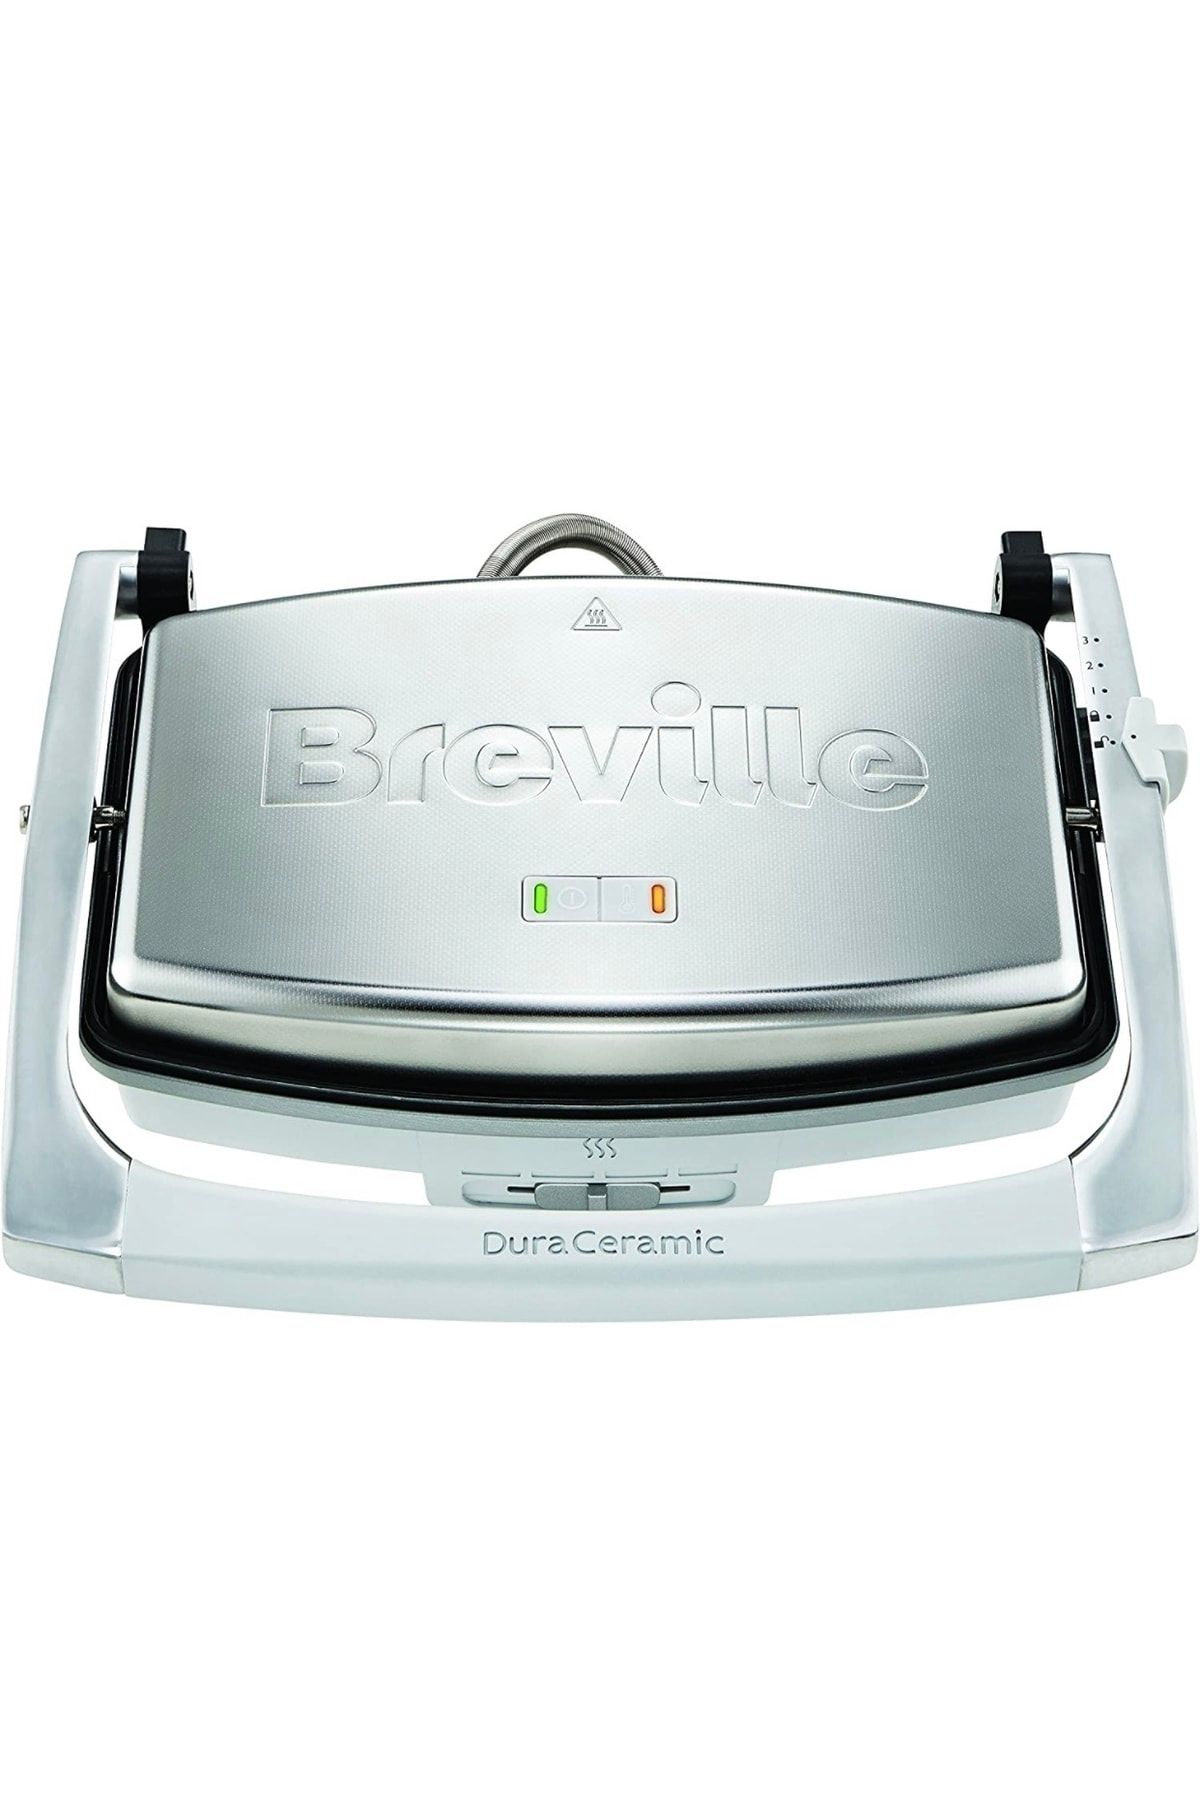 Breville Vst026x / Vst071x Duacreamic Sandviç Ve Tost Makinesi